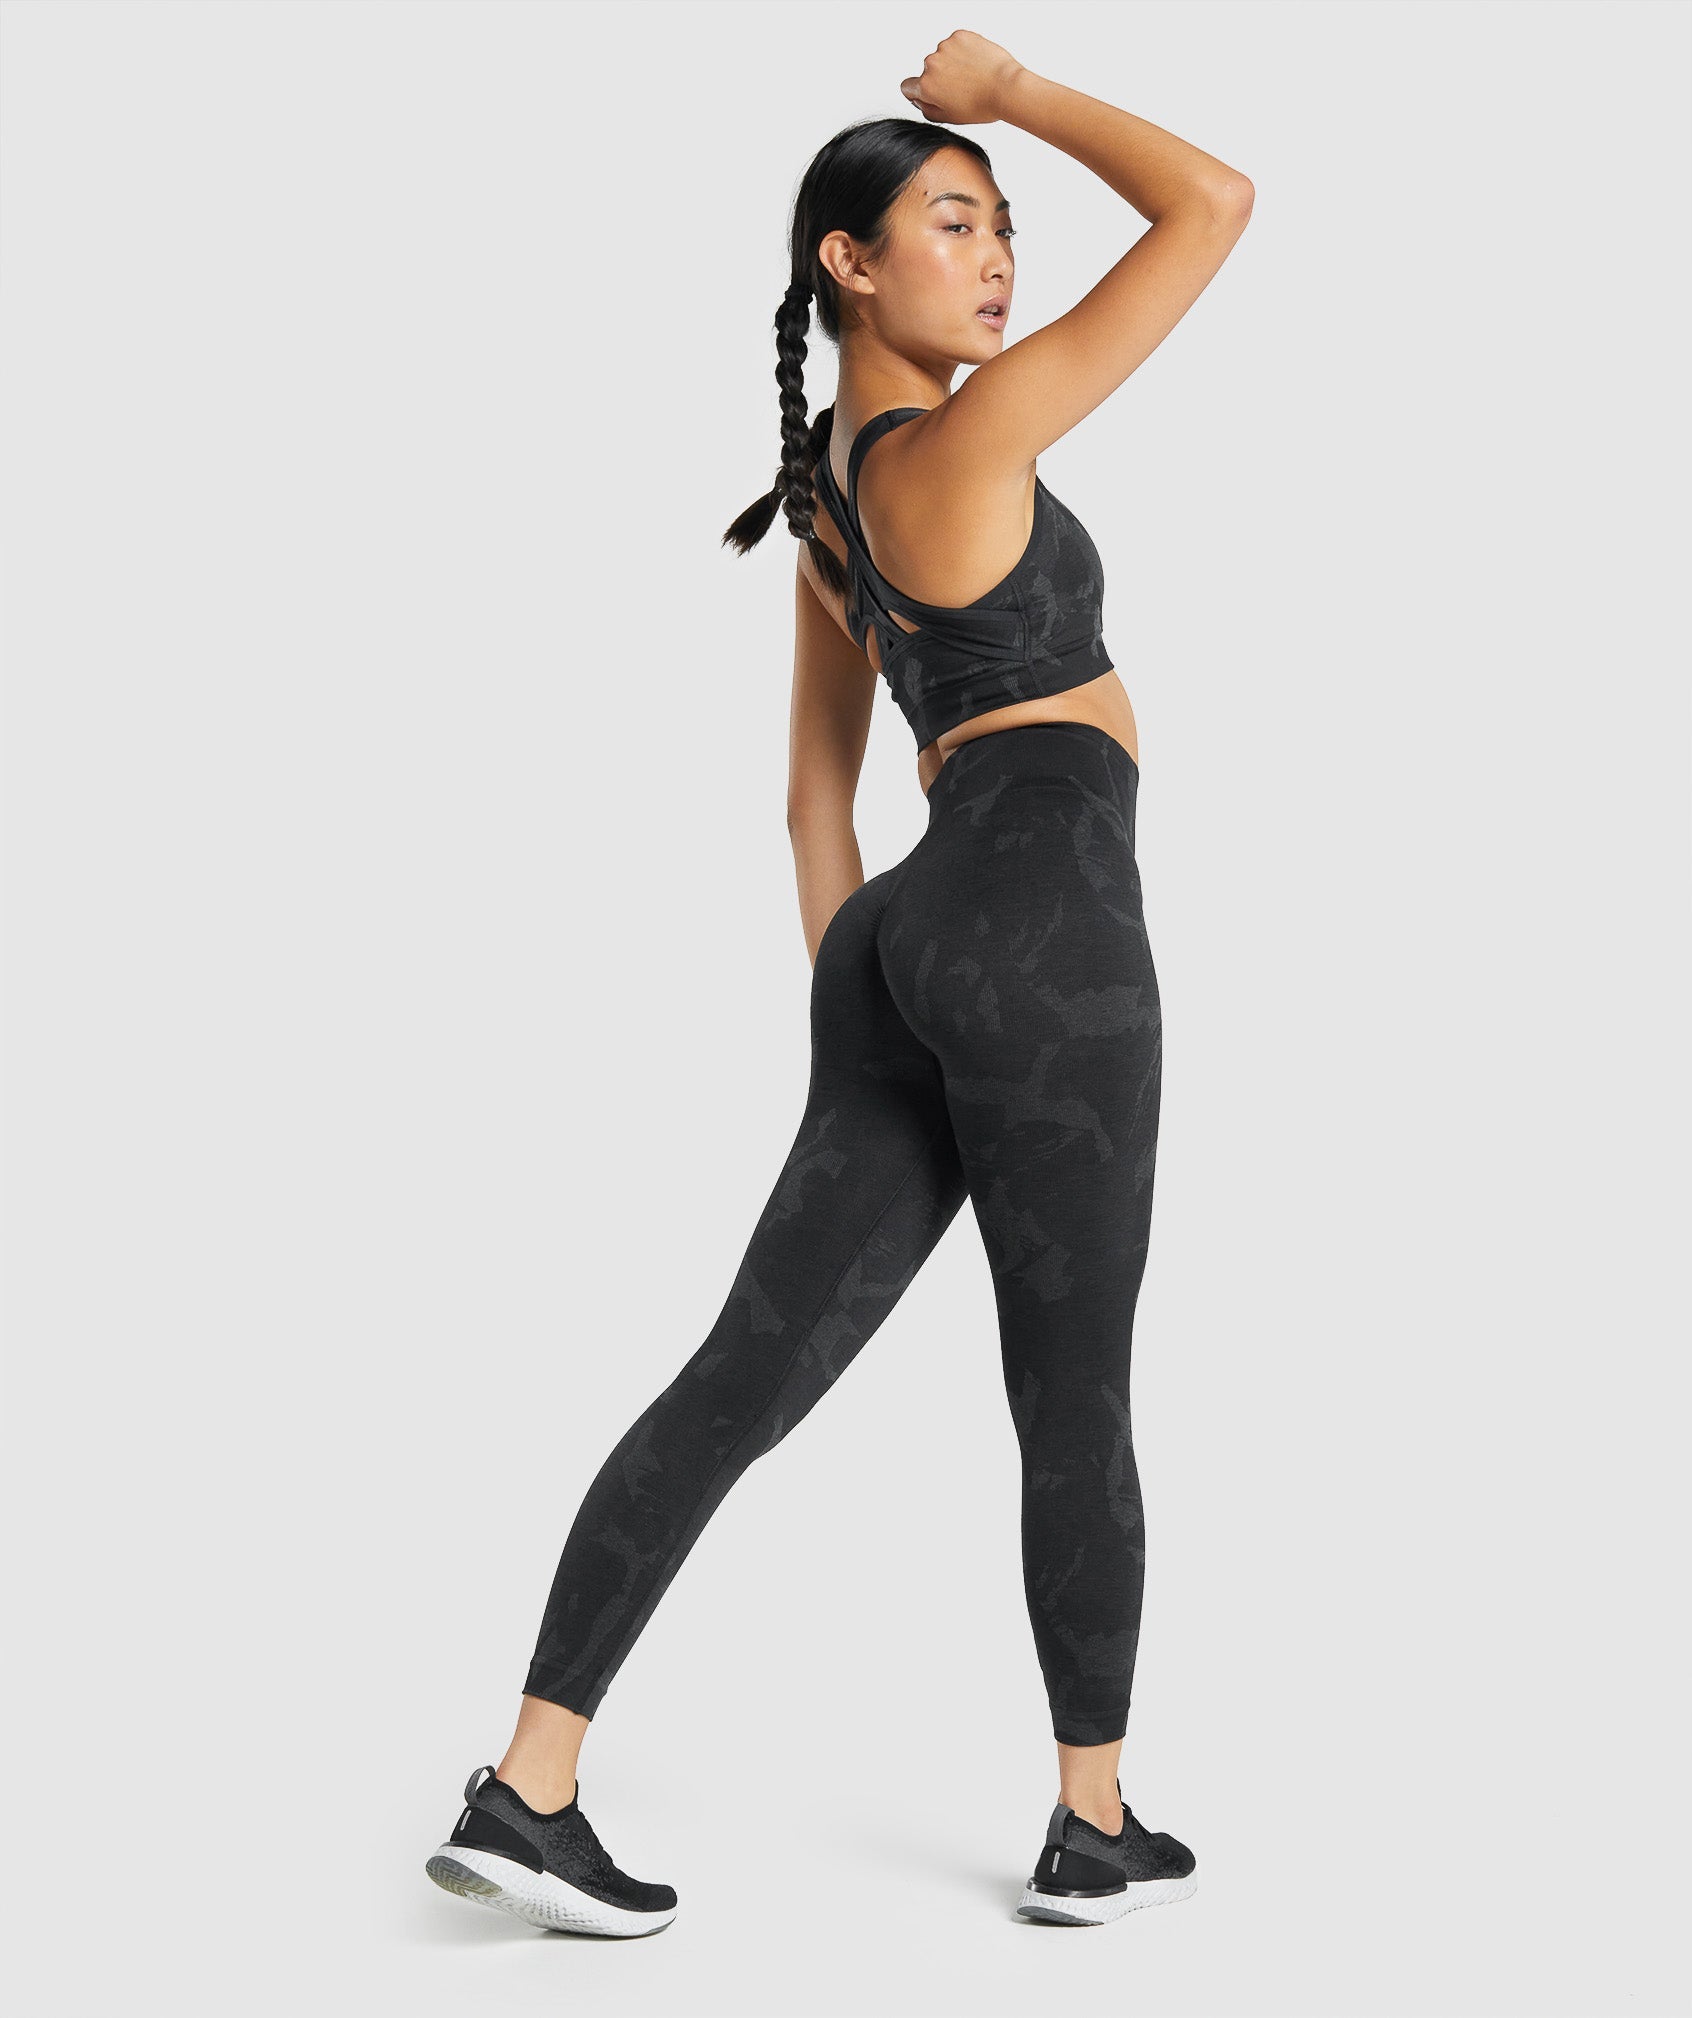 Gymshark Adapt Camo Seamless Leggings Black Size XL - $50 (16% Off Retail)  - From Jasmine